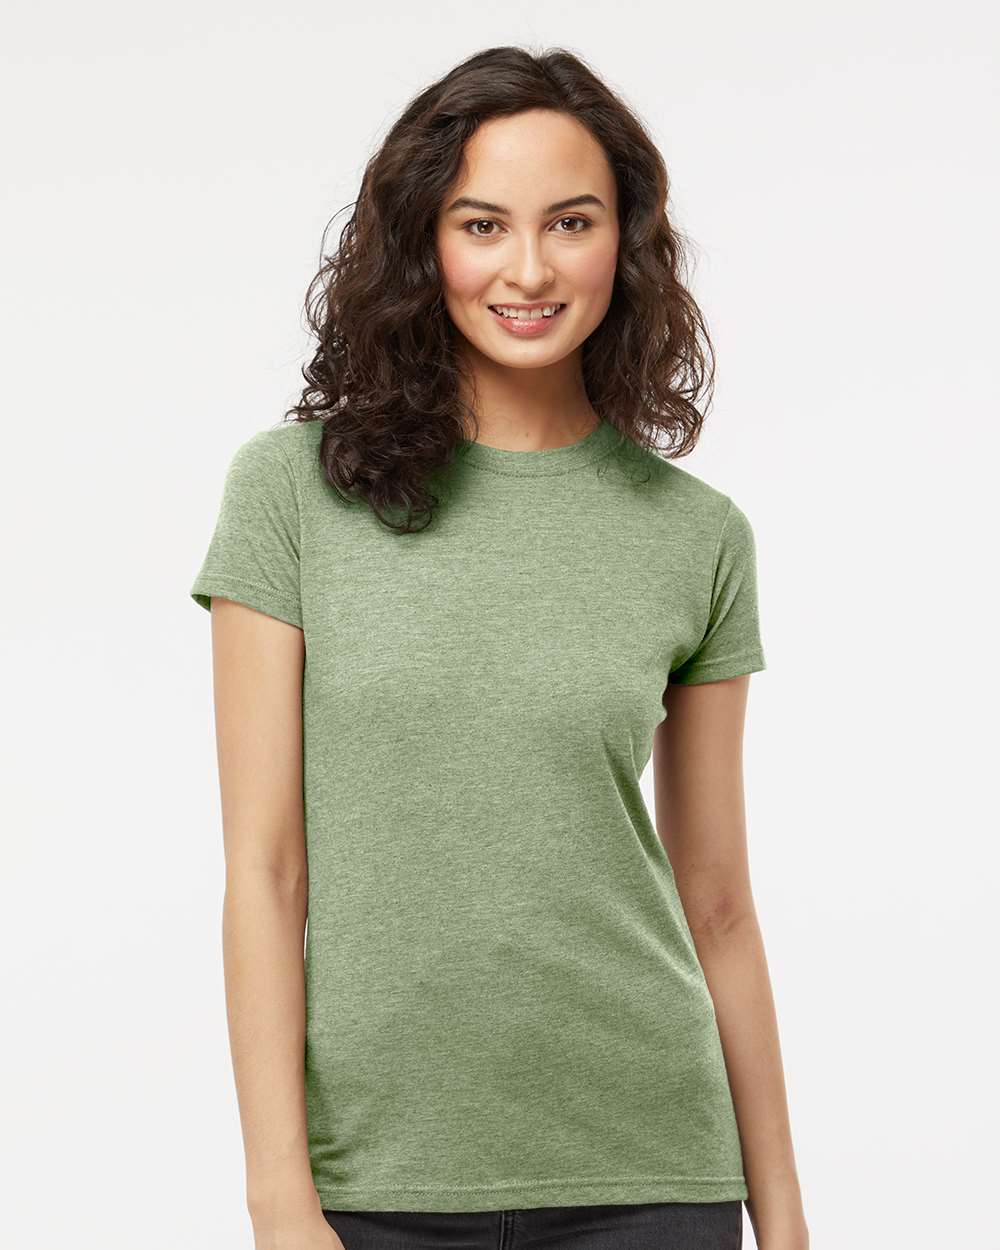 M&O Women’s Deluxe Blend T-Shirt #3540 Heather Green